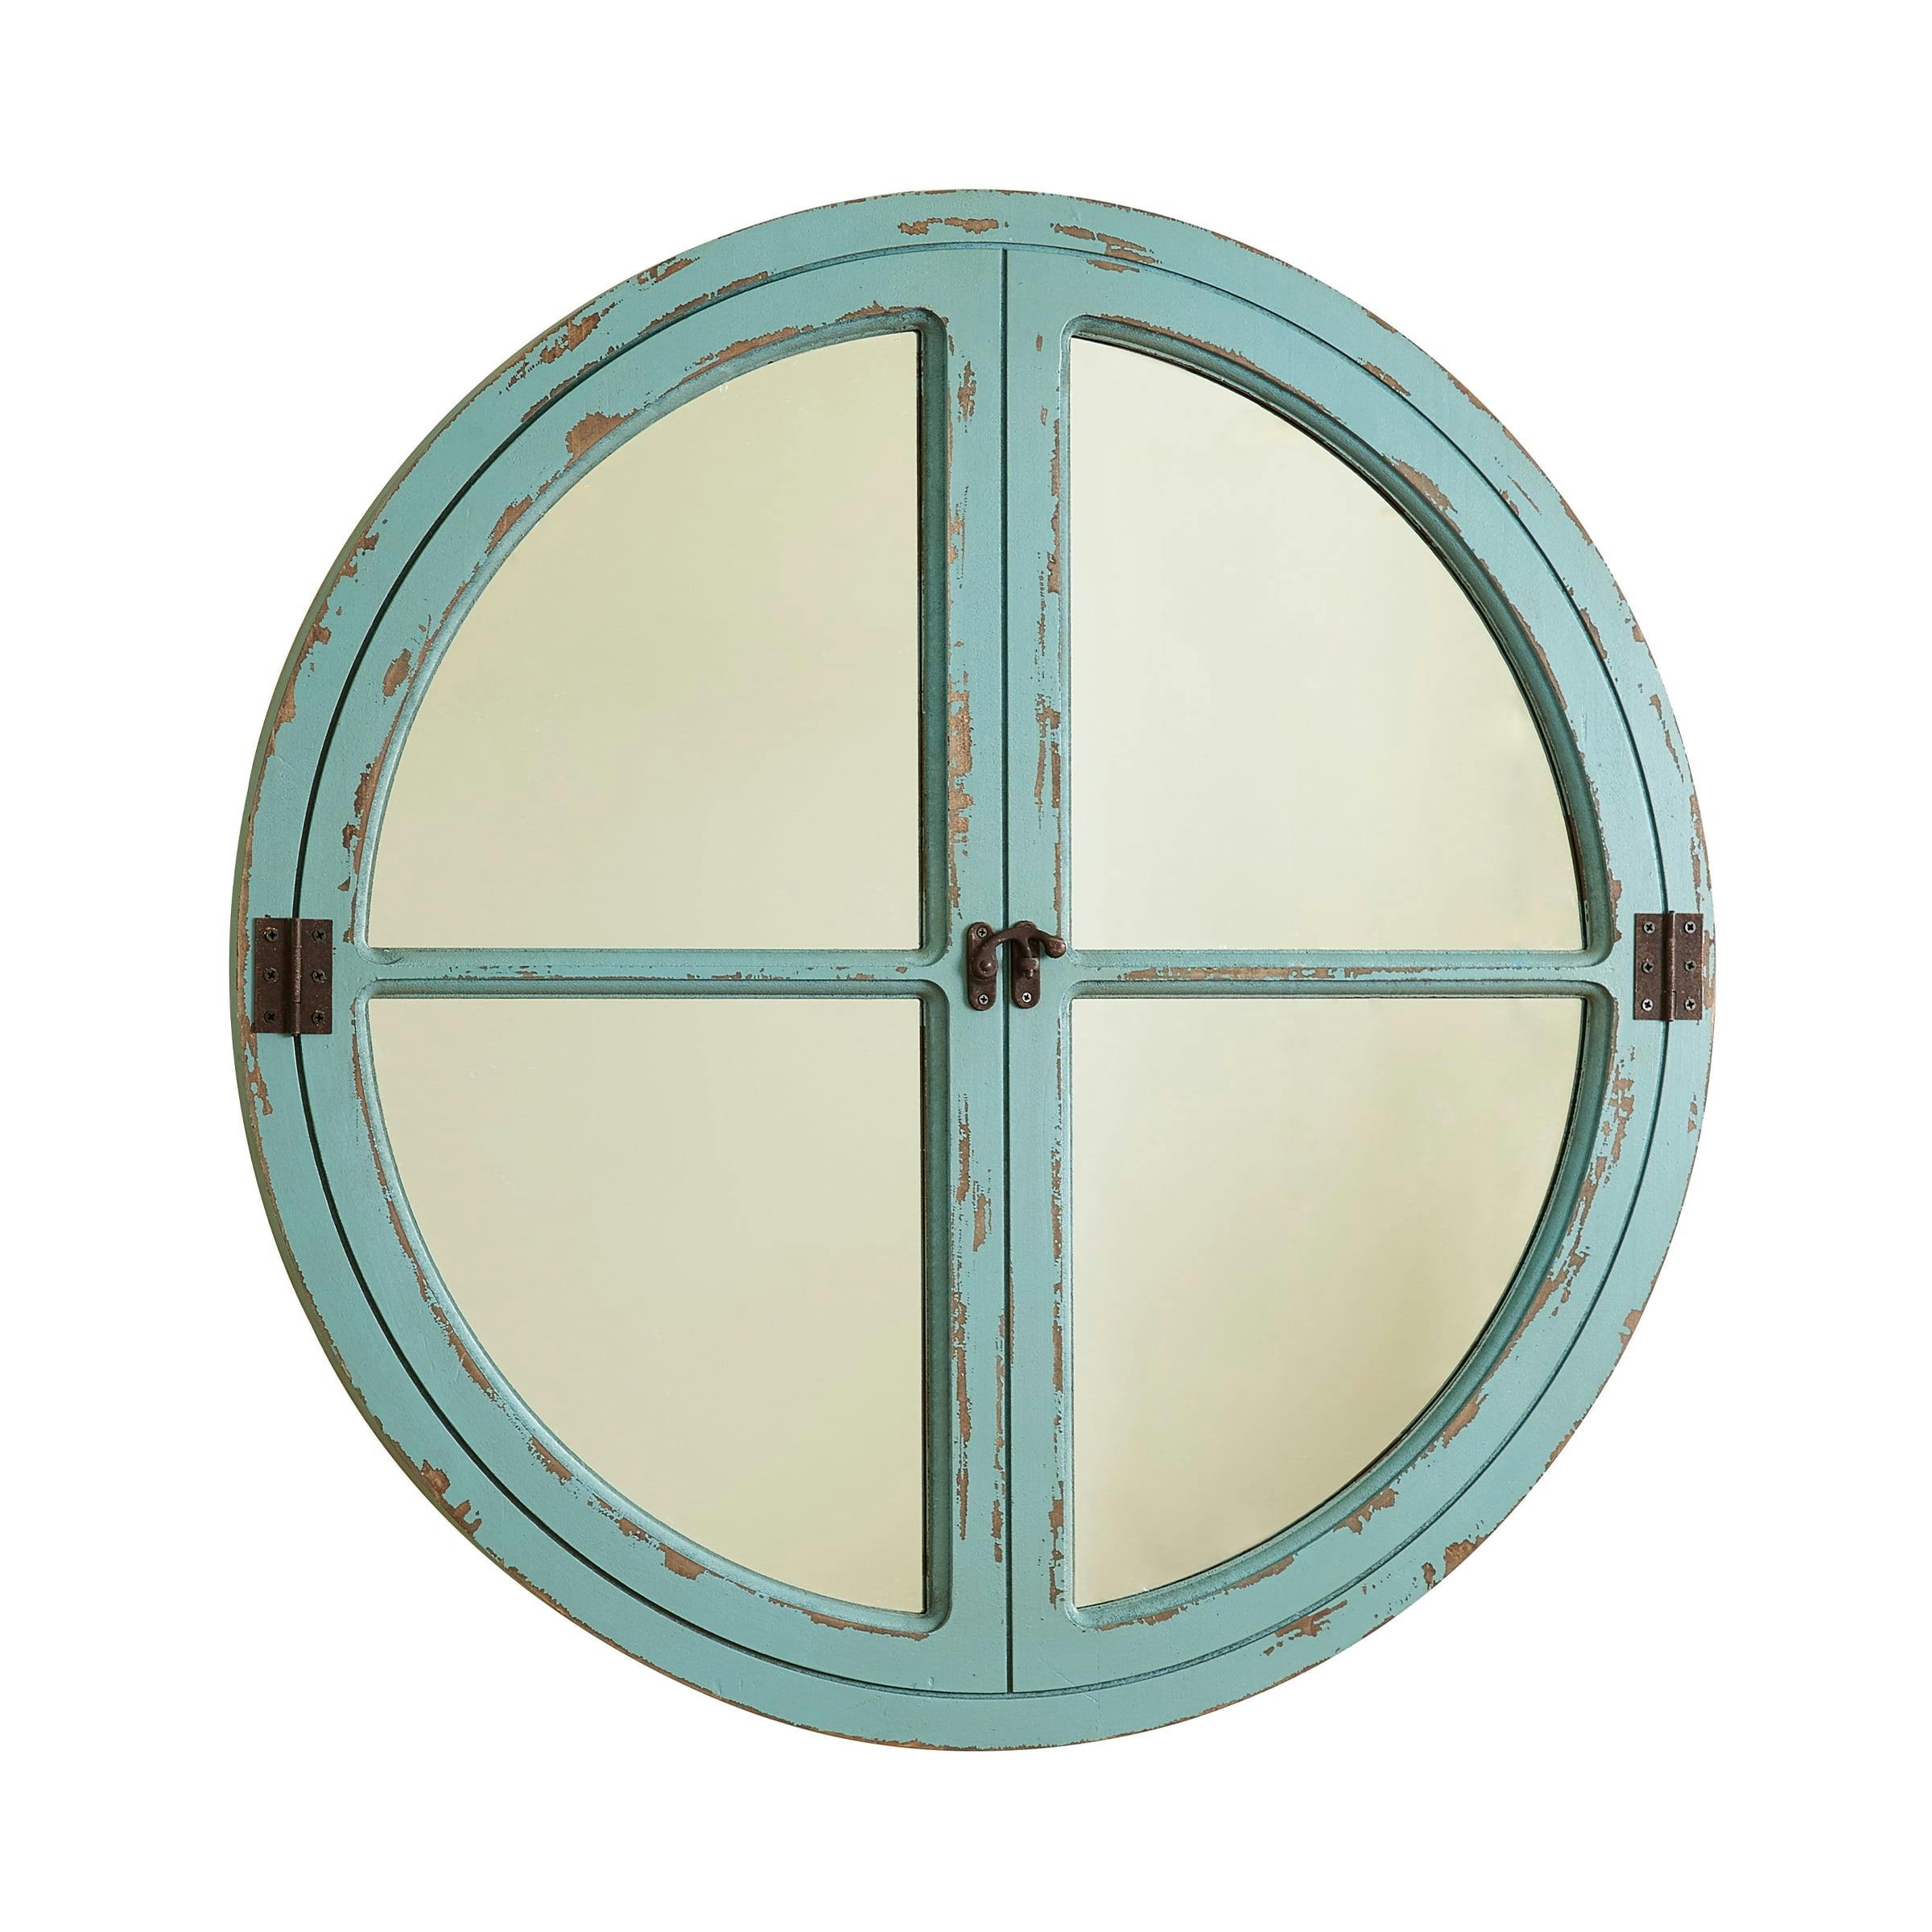 Bronze Finish Round Wooden Bathroom Mirror with Window Panes